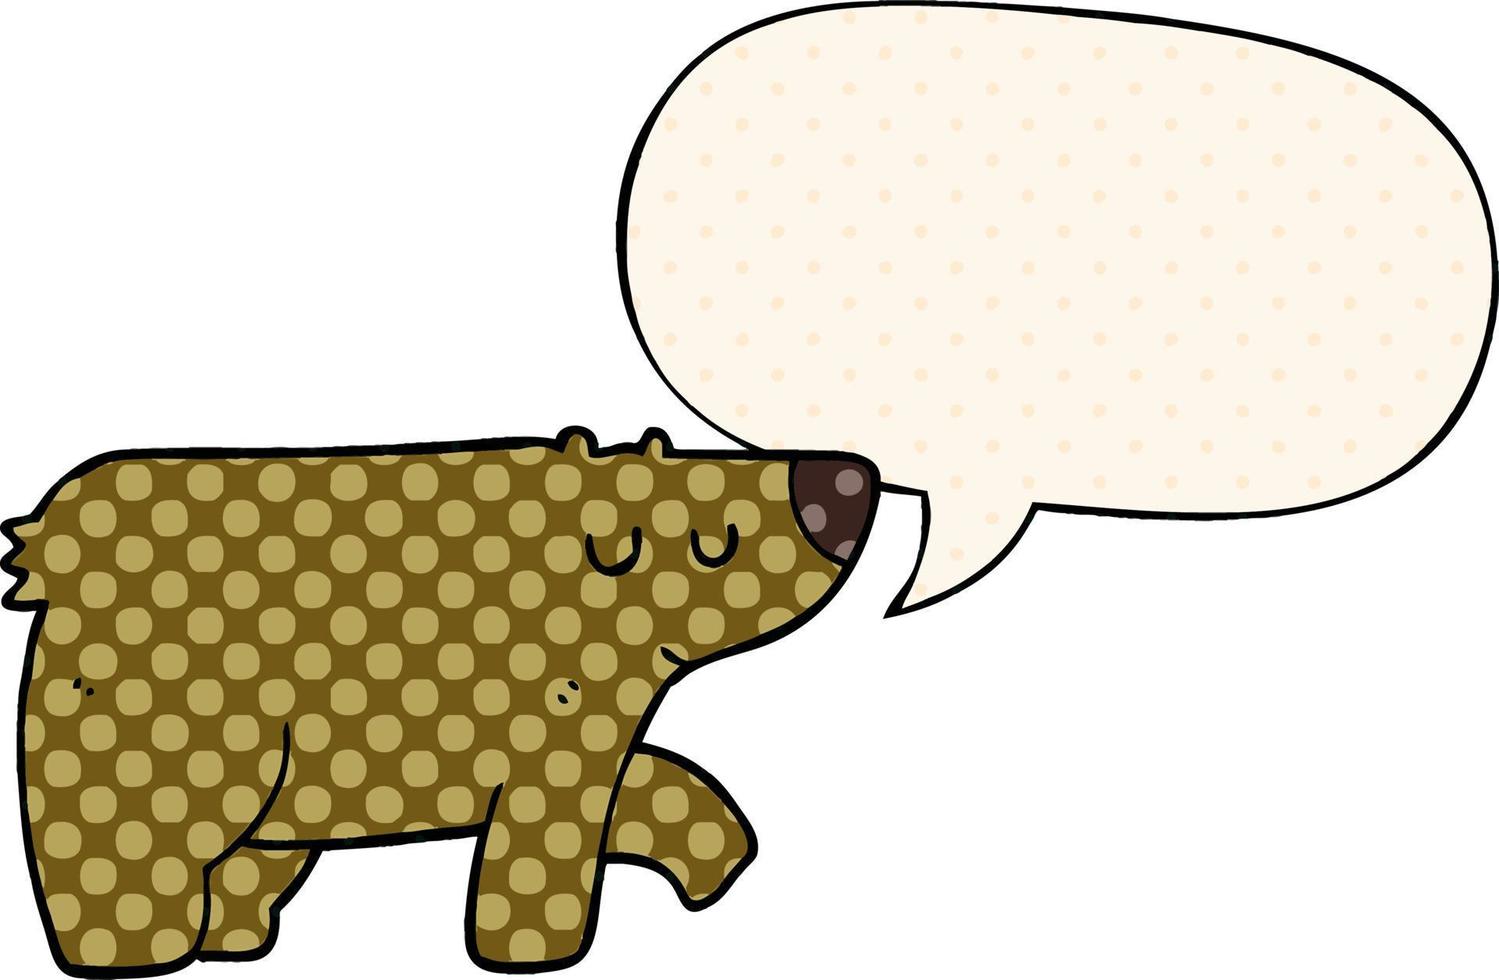 cartoon bear and speech bubble in comic book style vector